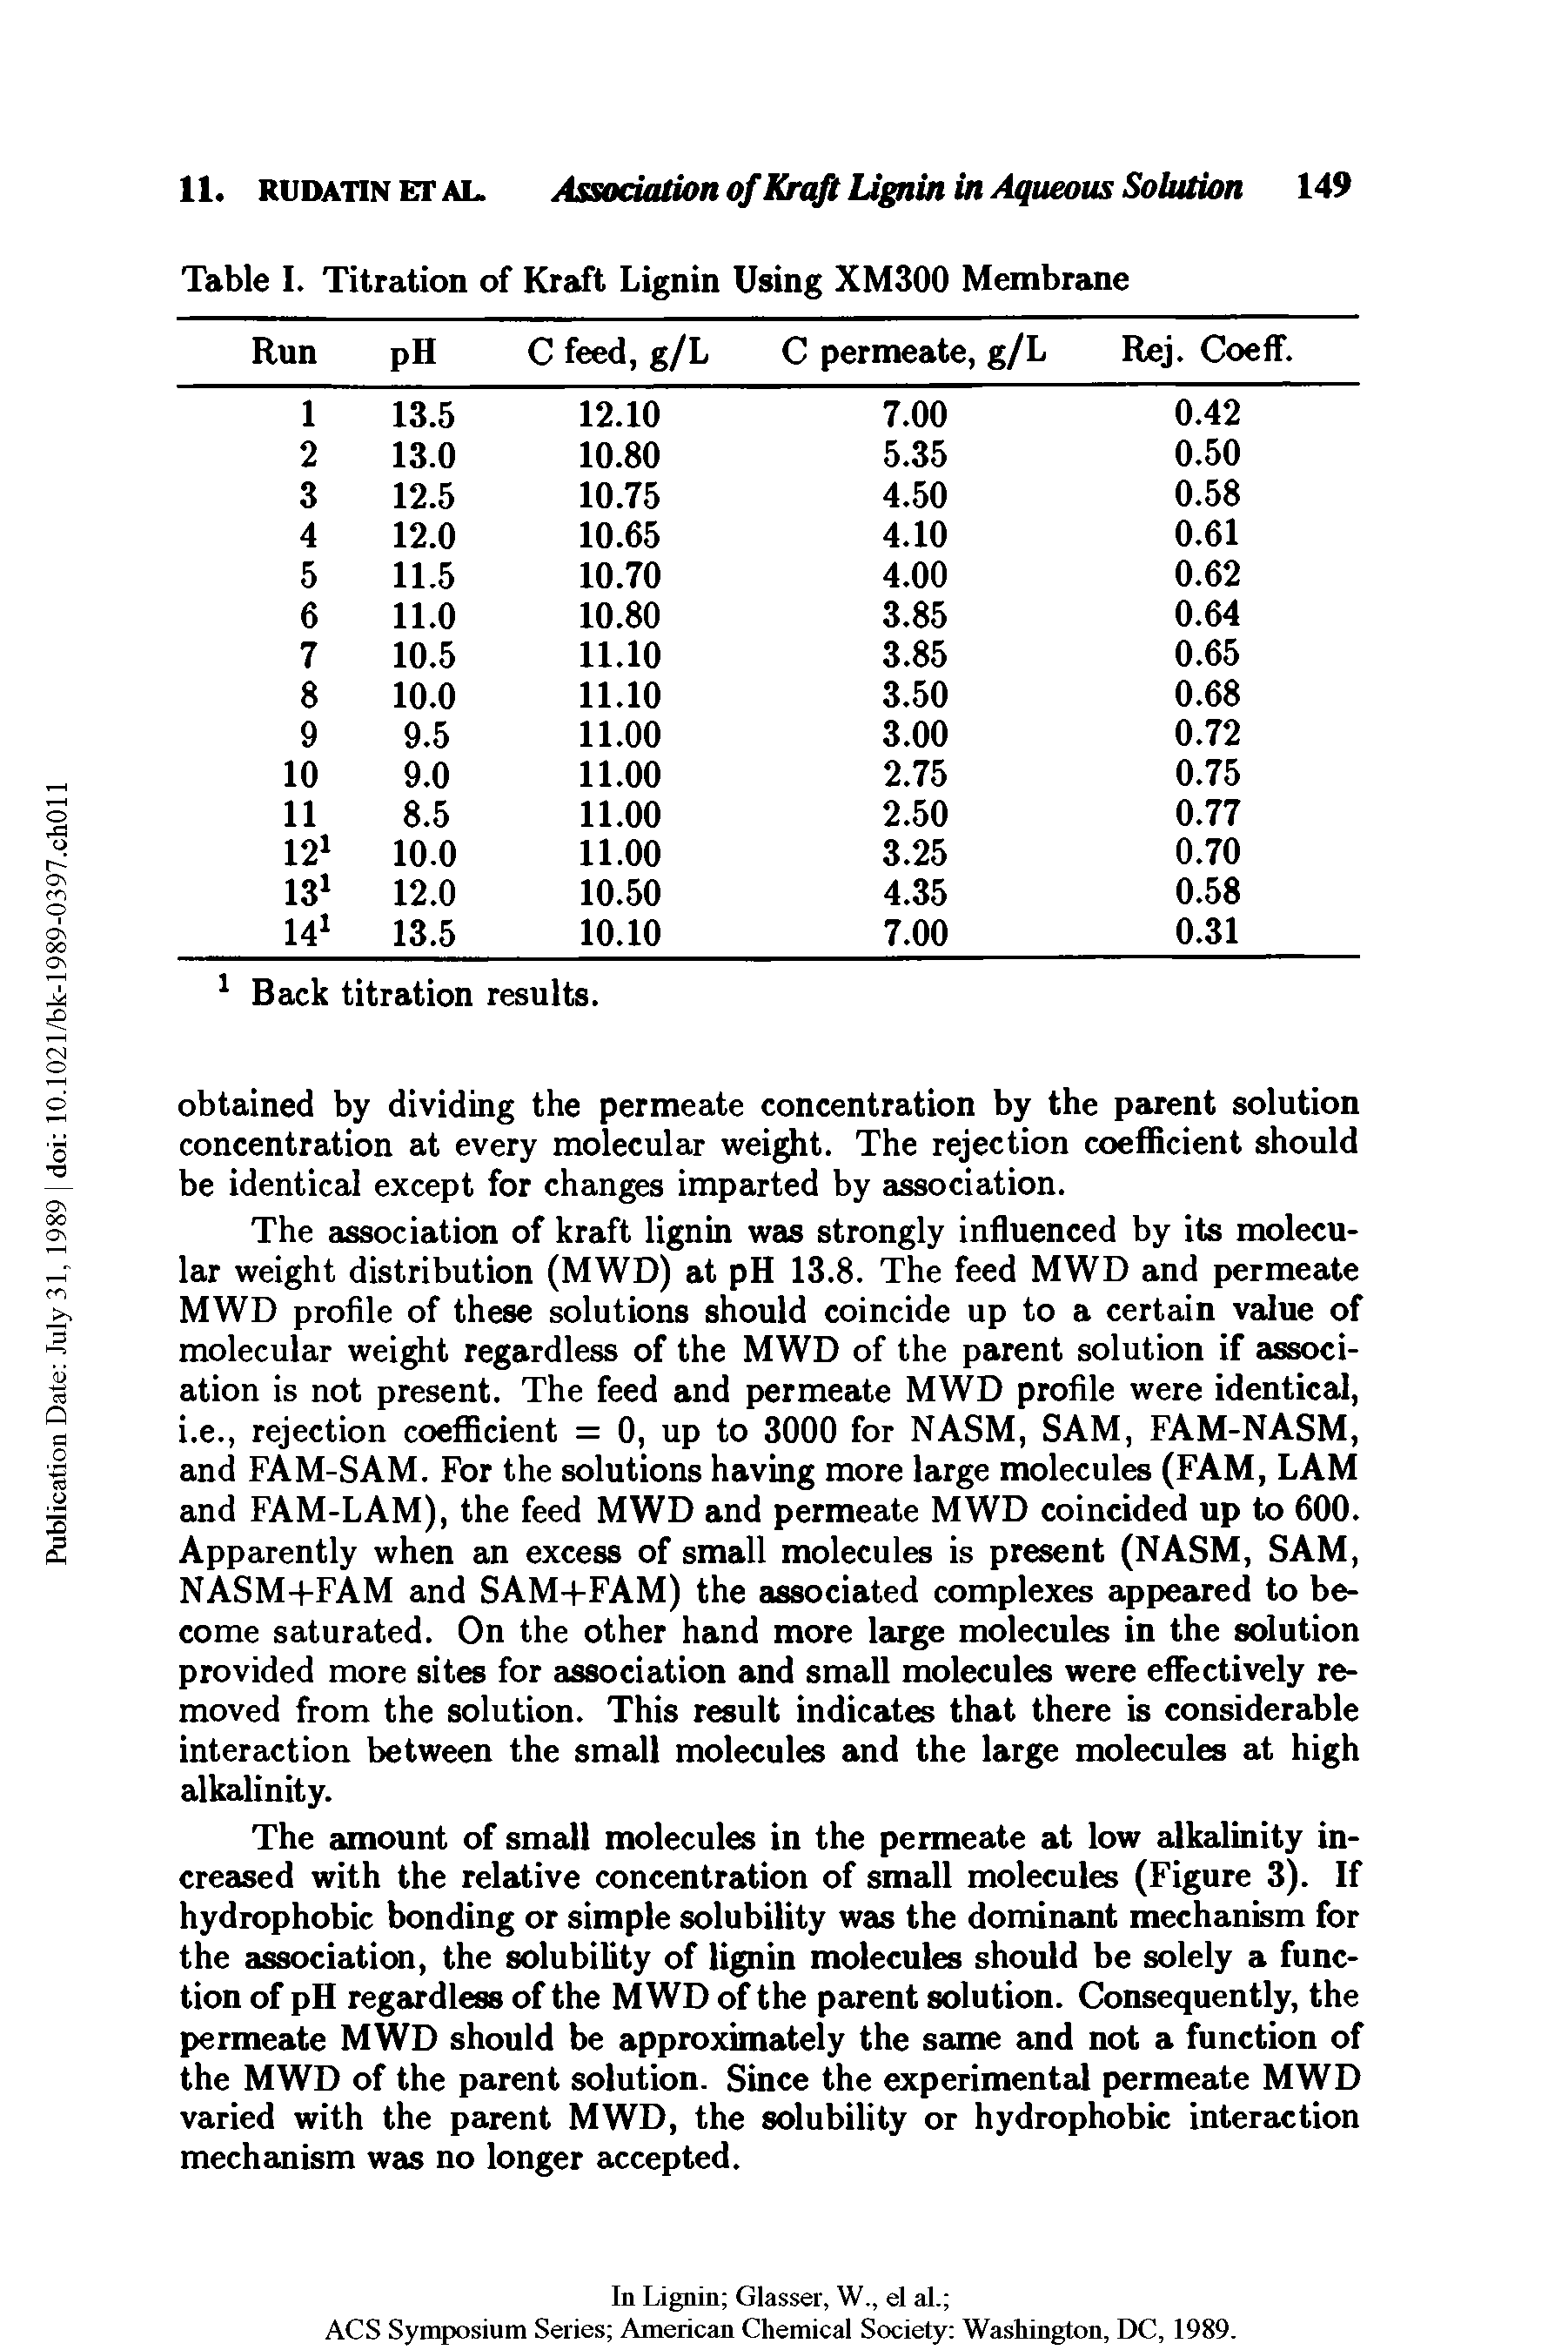 Table I. Titration of Kraft Lignin Using XM300 Membrane...